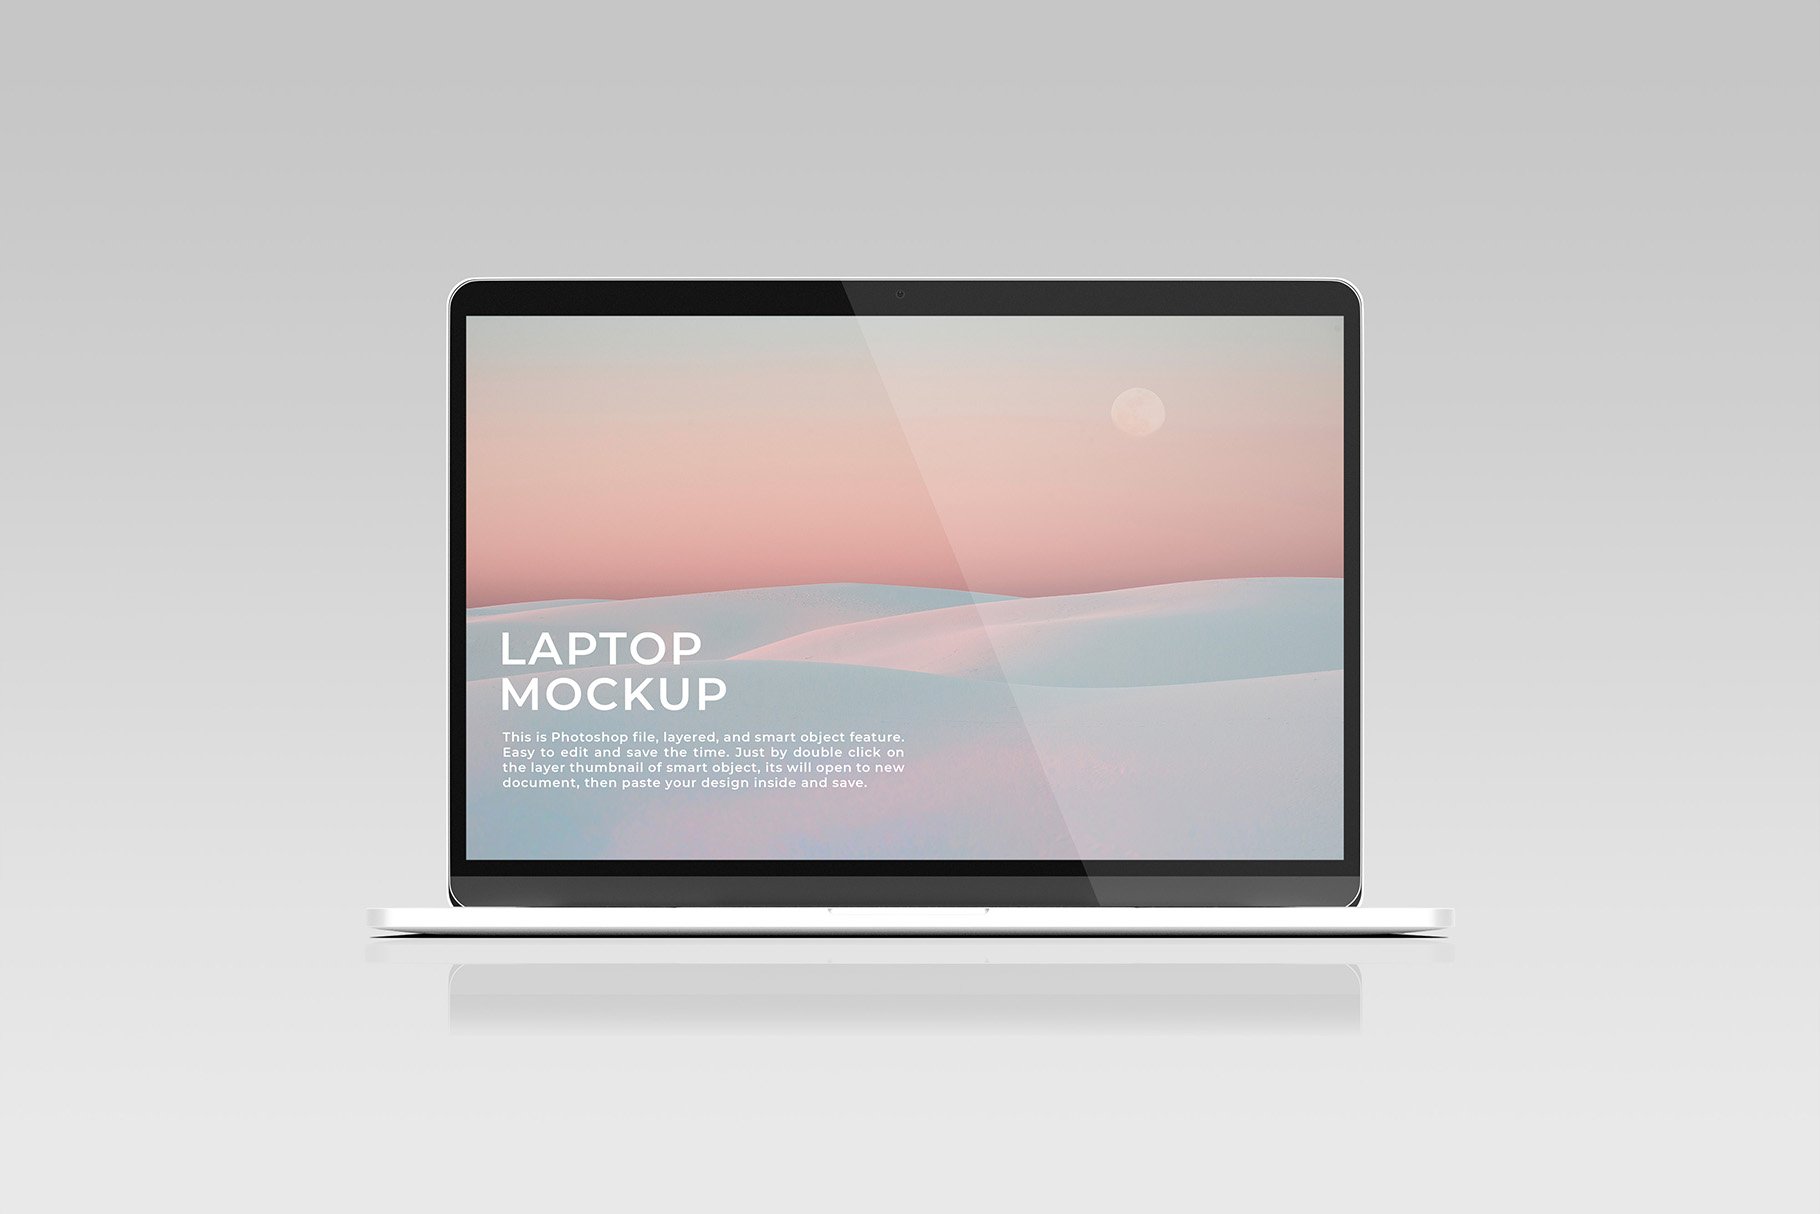 MacBook Pro Mockup preview image.